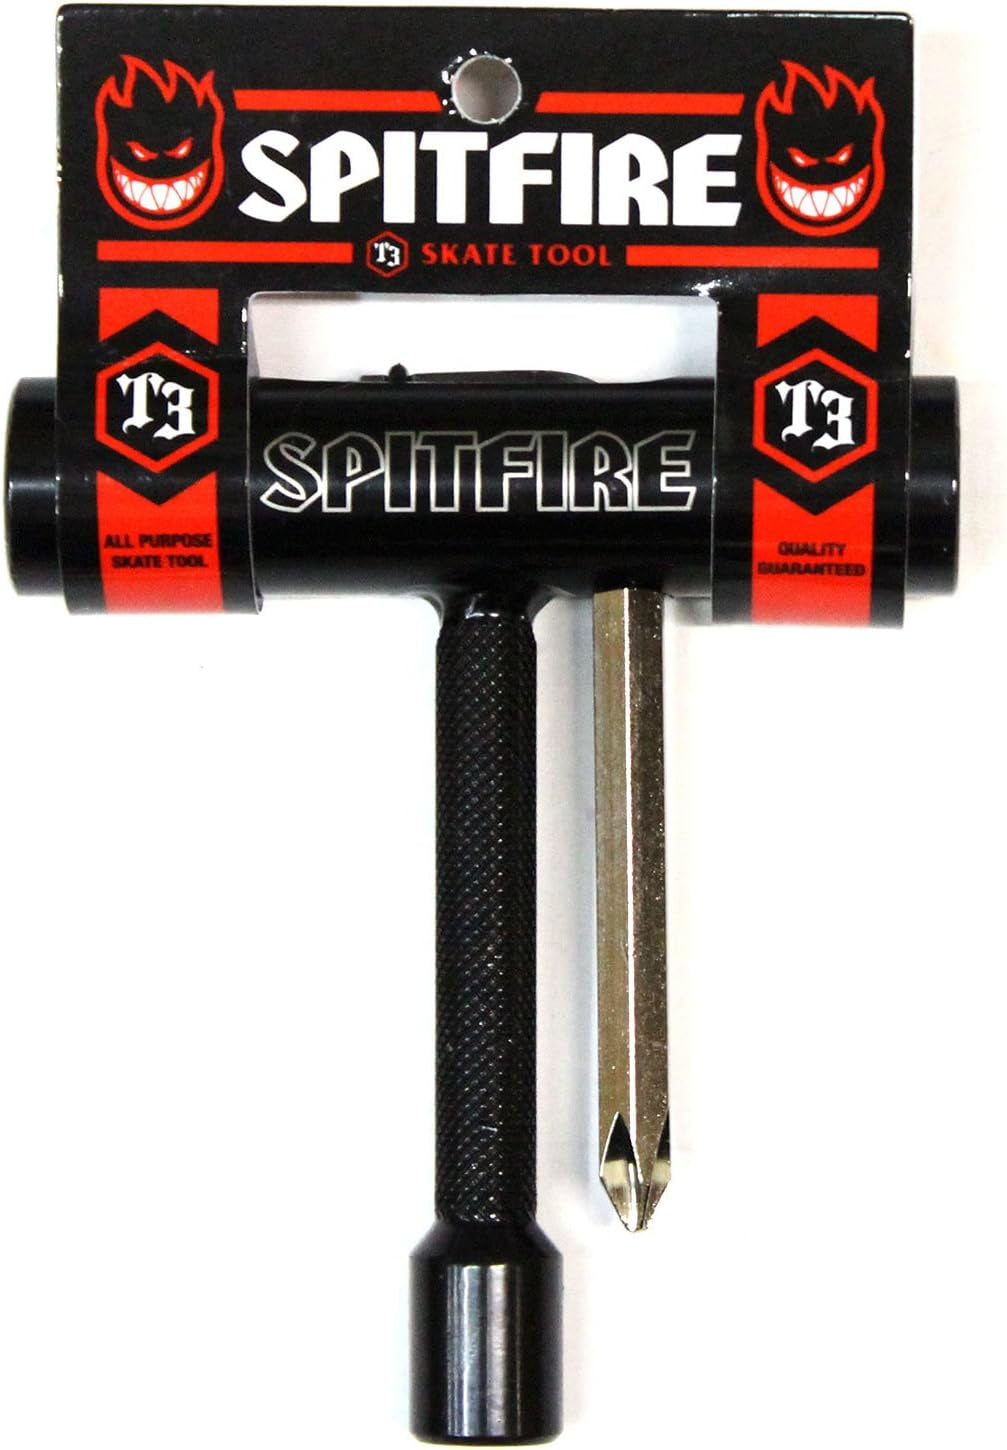 Spitfire Black-Silver T3 Skateboard Tool